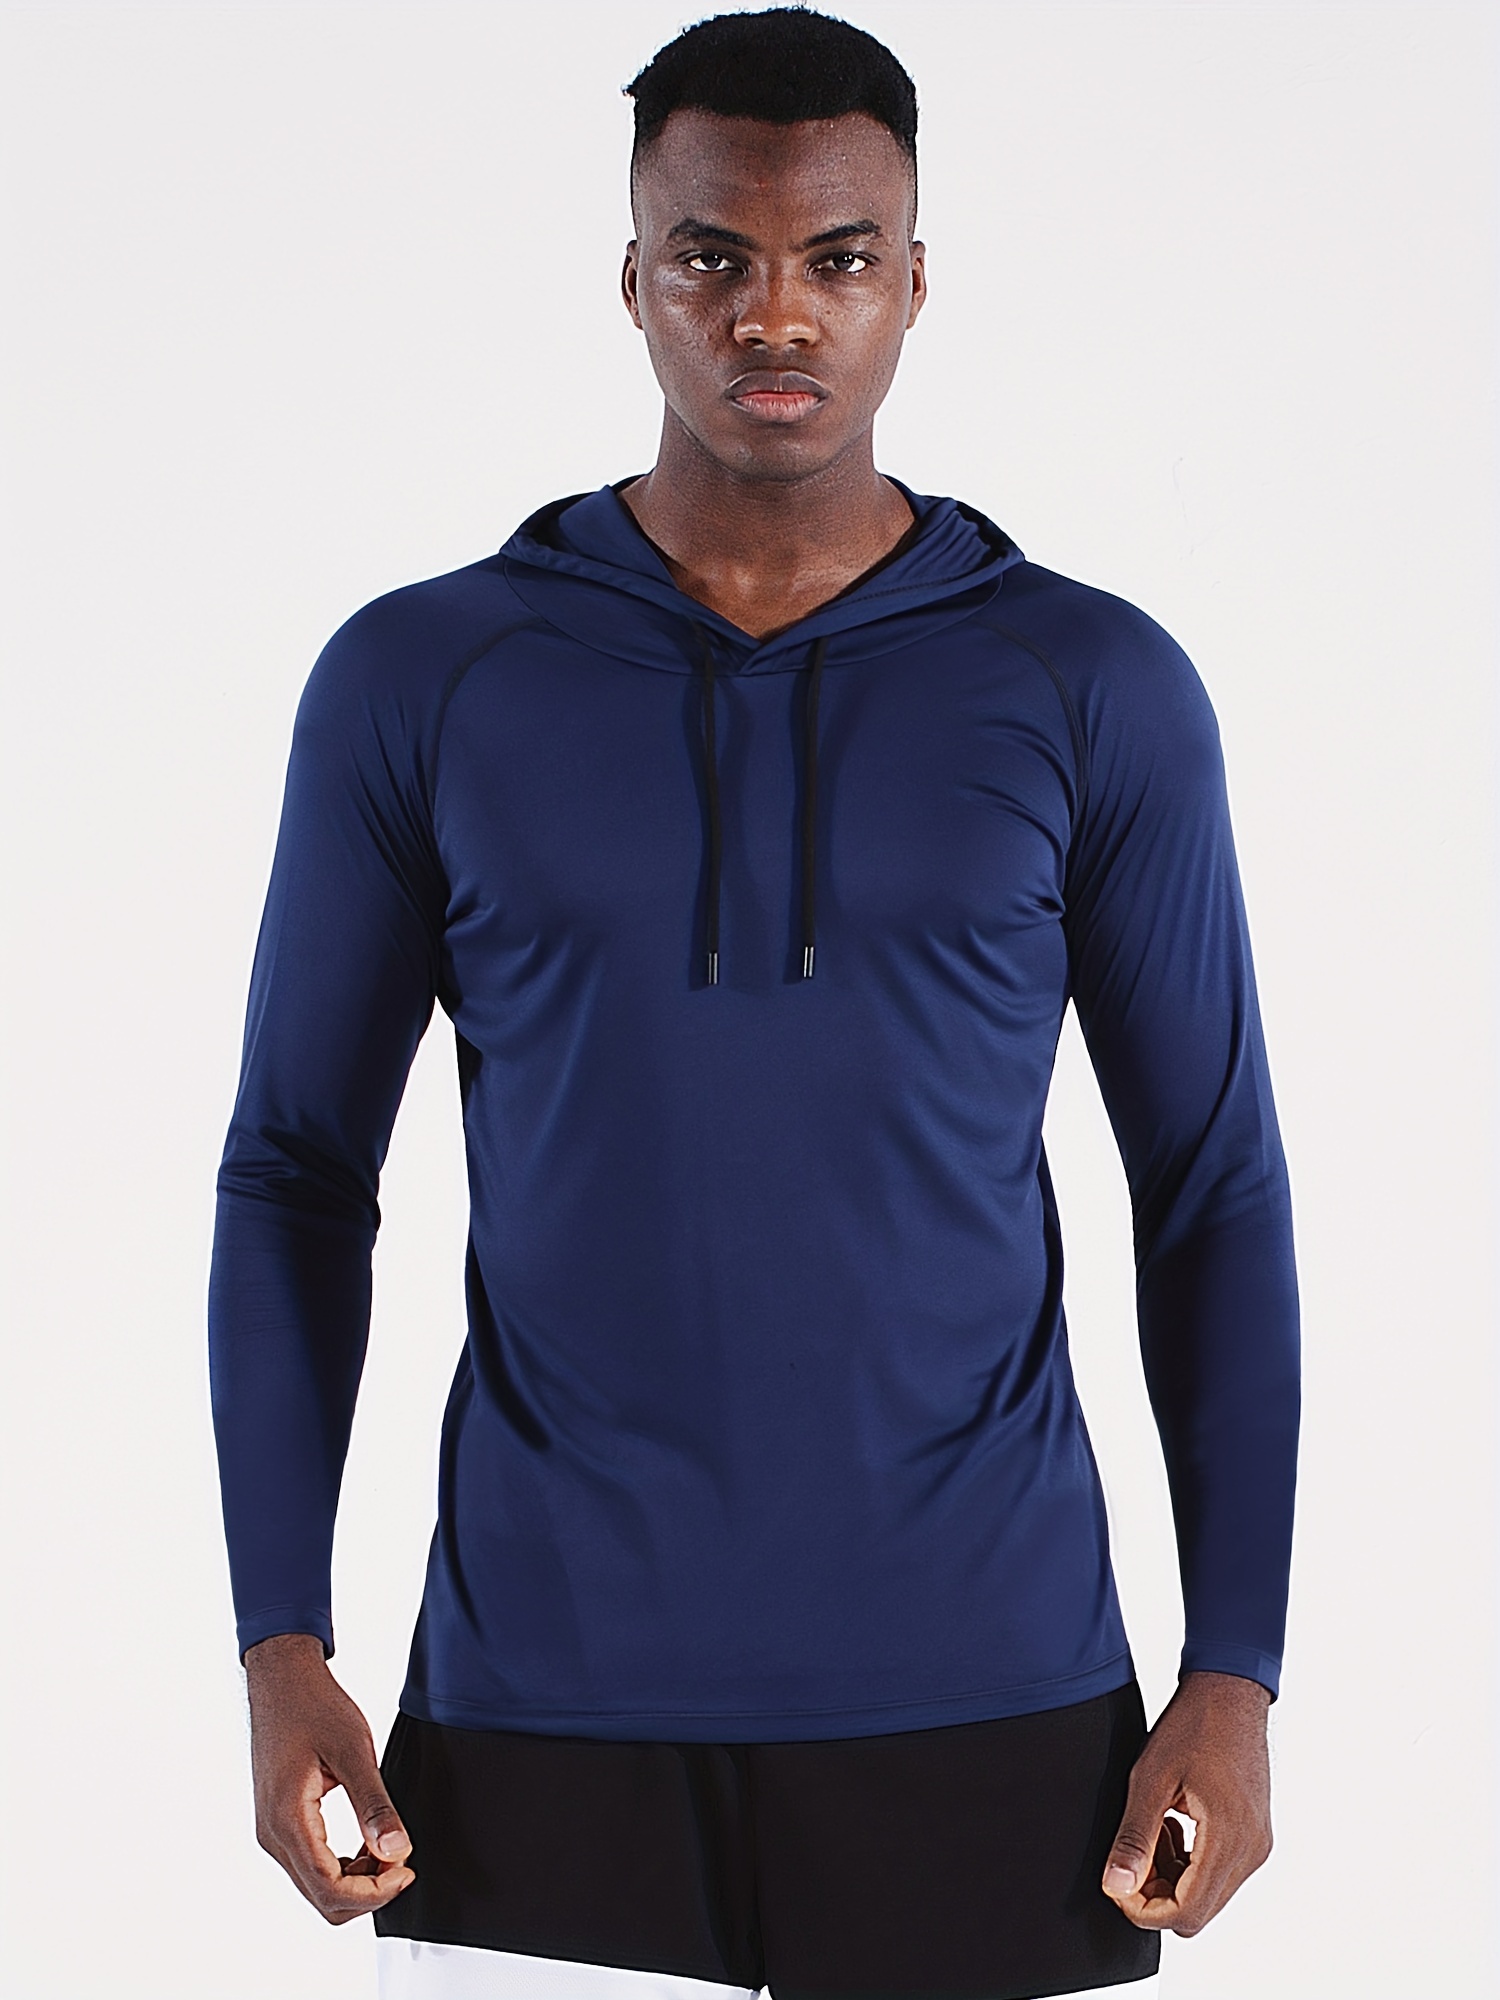  Mens Lightweight UPF 50 Sleeveless Workout Shirts Breathable  Training Yoga Tank Tops Sun Block Active Jogging Sportswear Tops Light Blue  XL